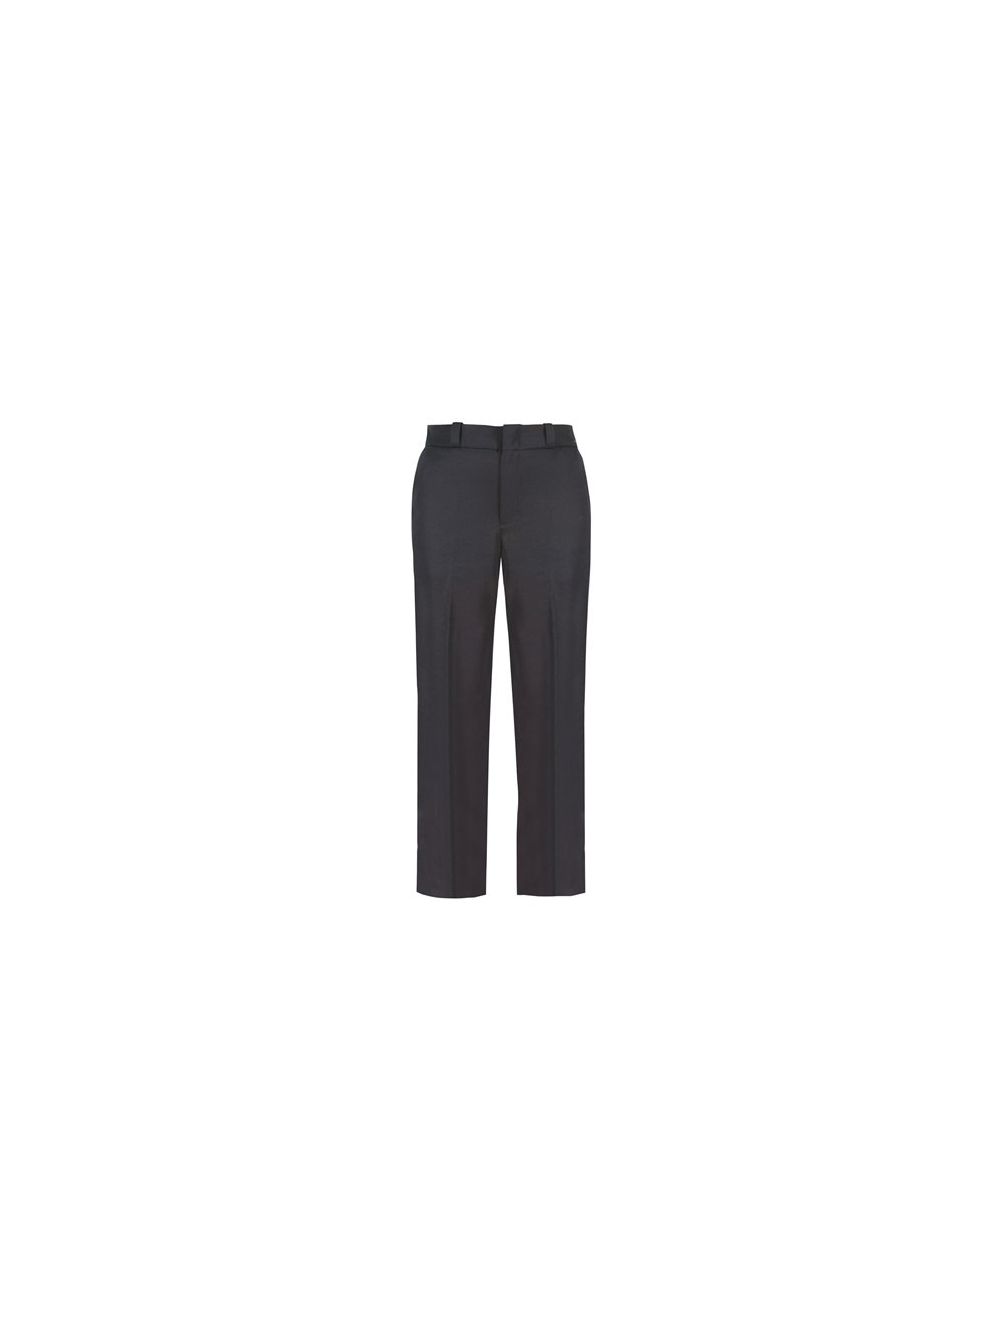 TexTrop2 4-Pocket Pants w/Black Stripe